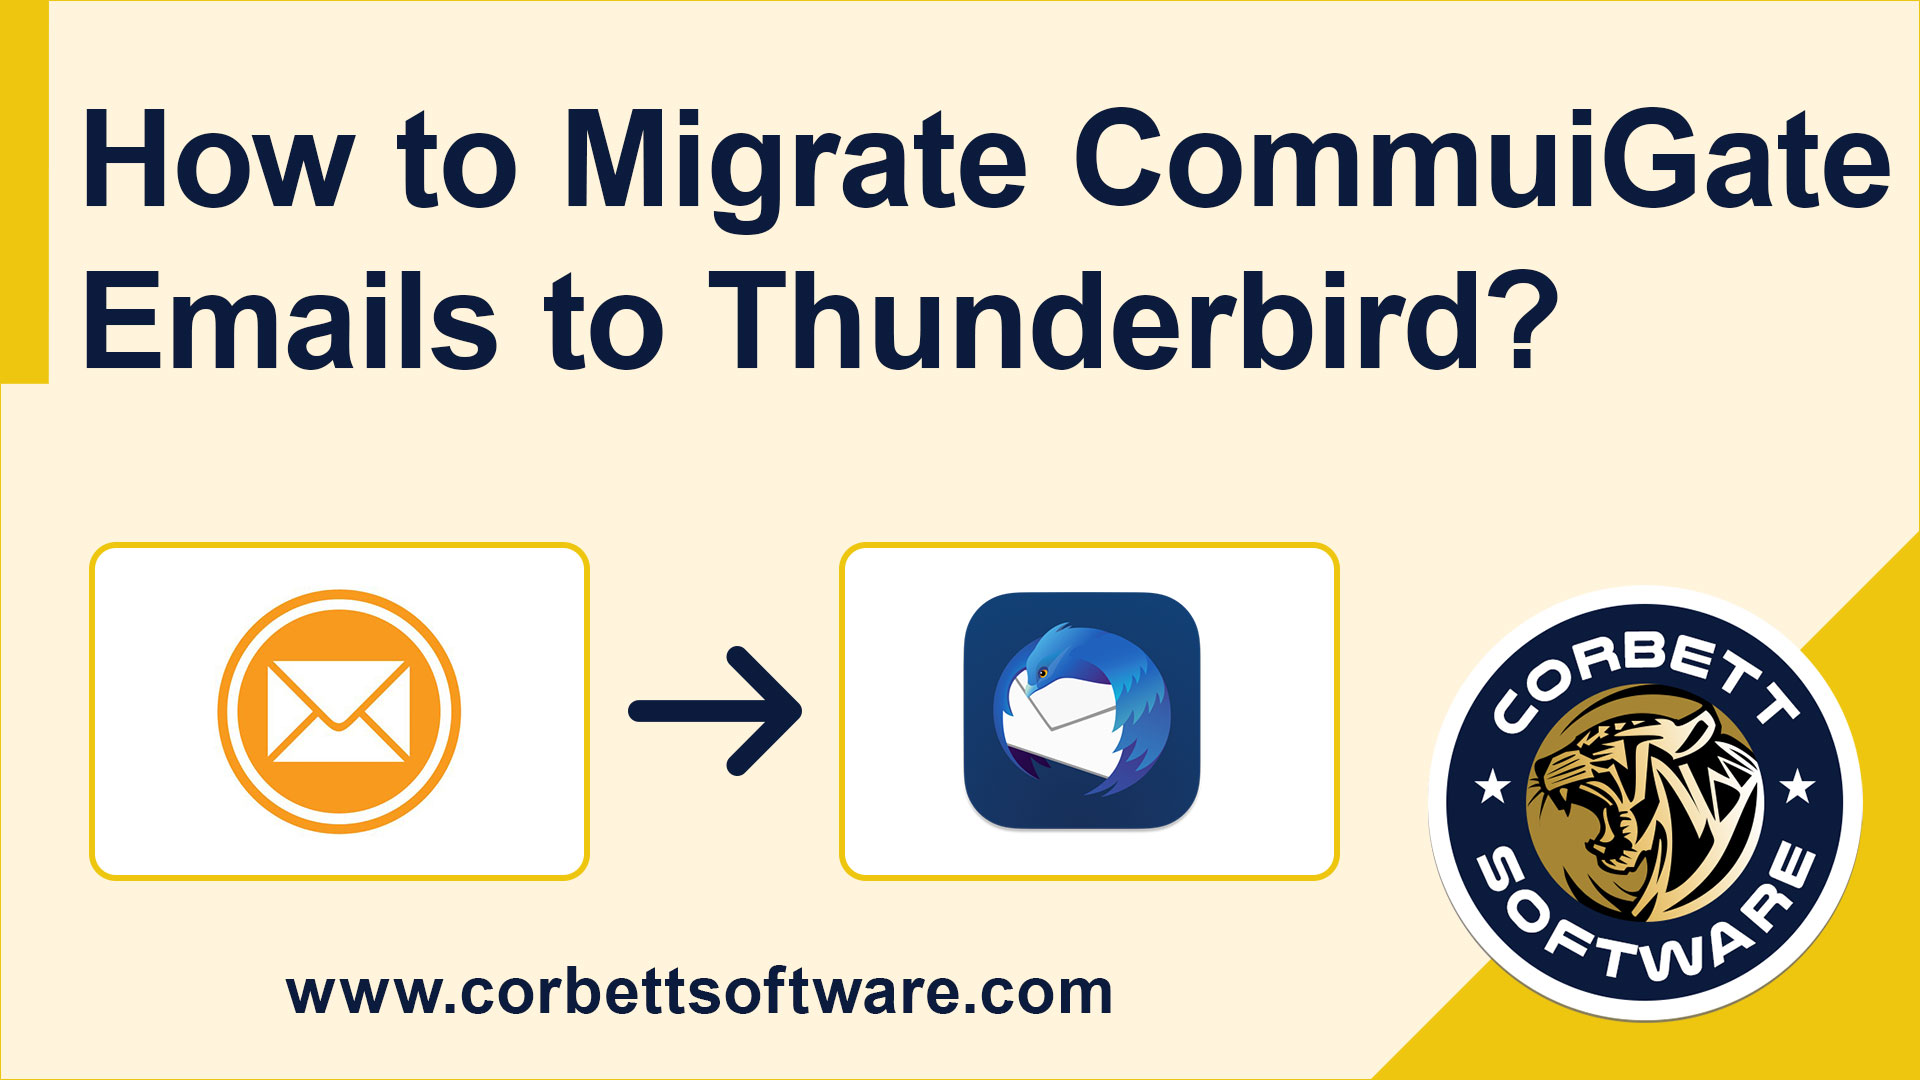 communigate emails to thunderbird